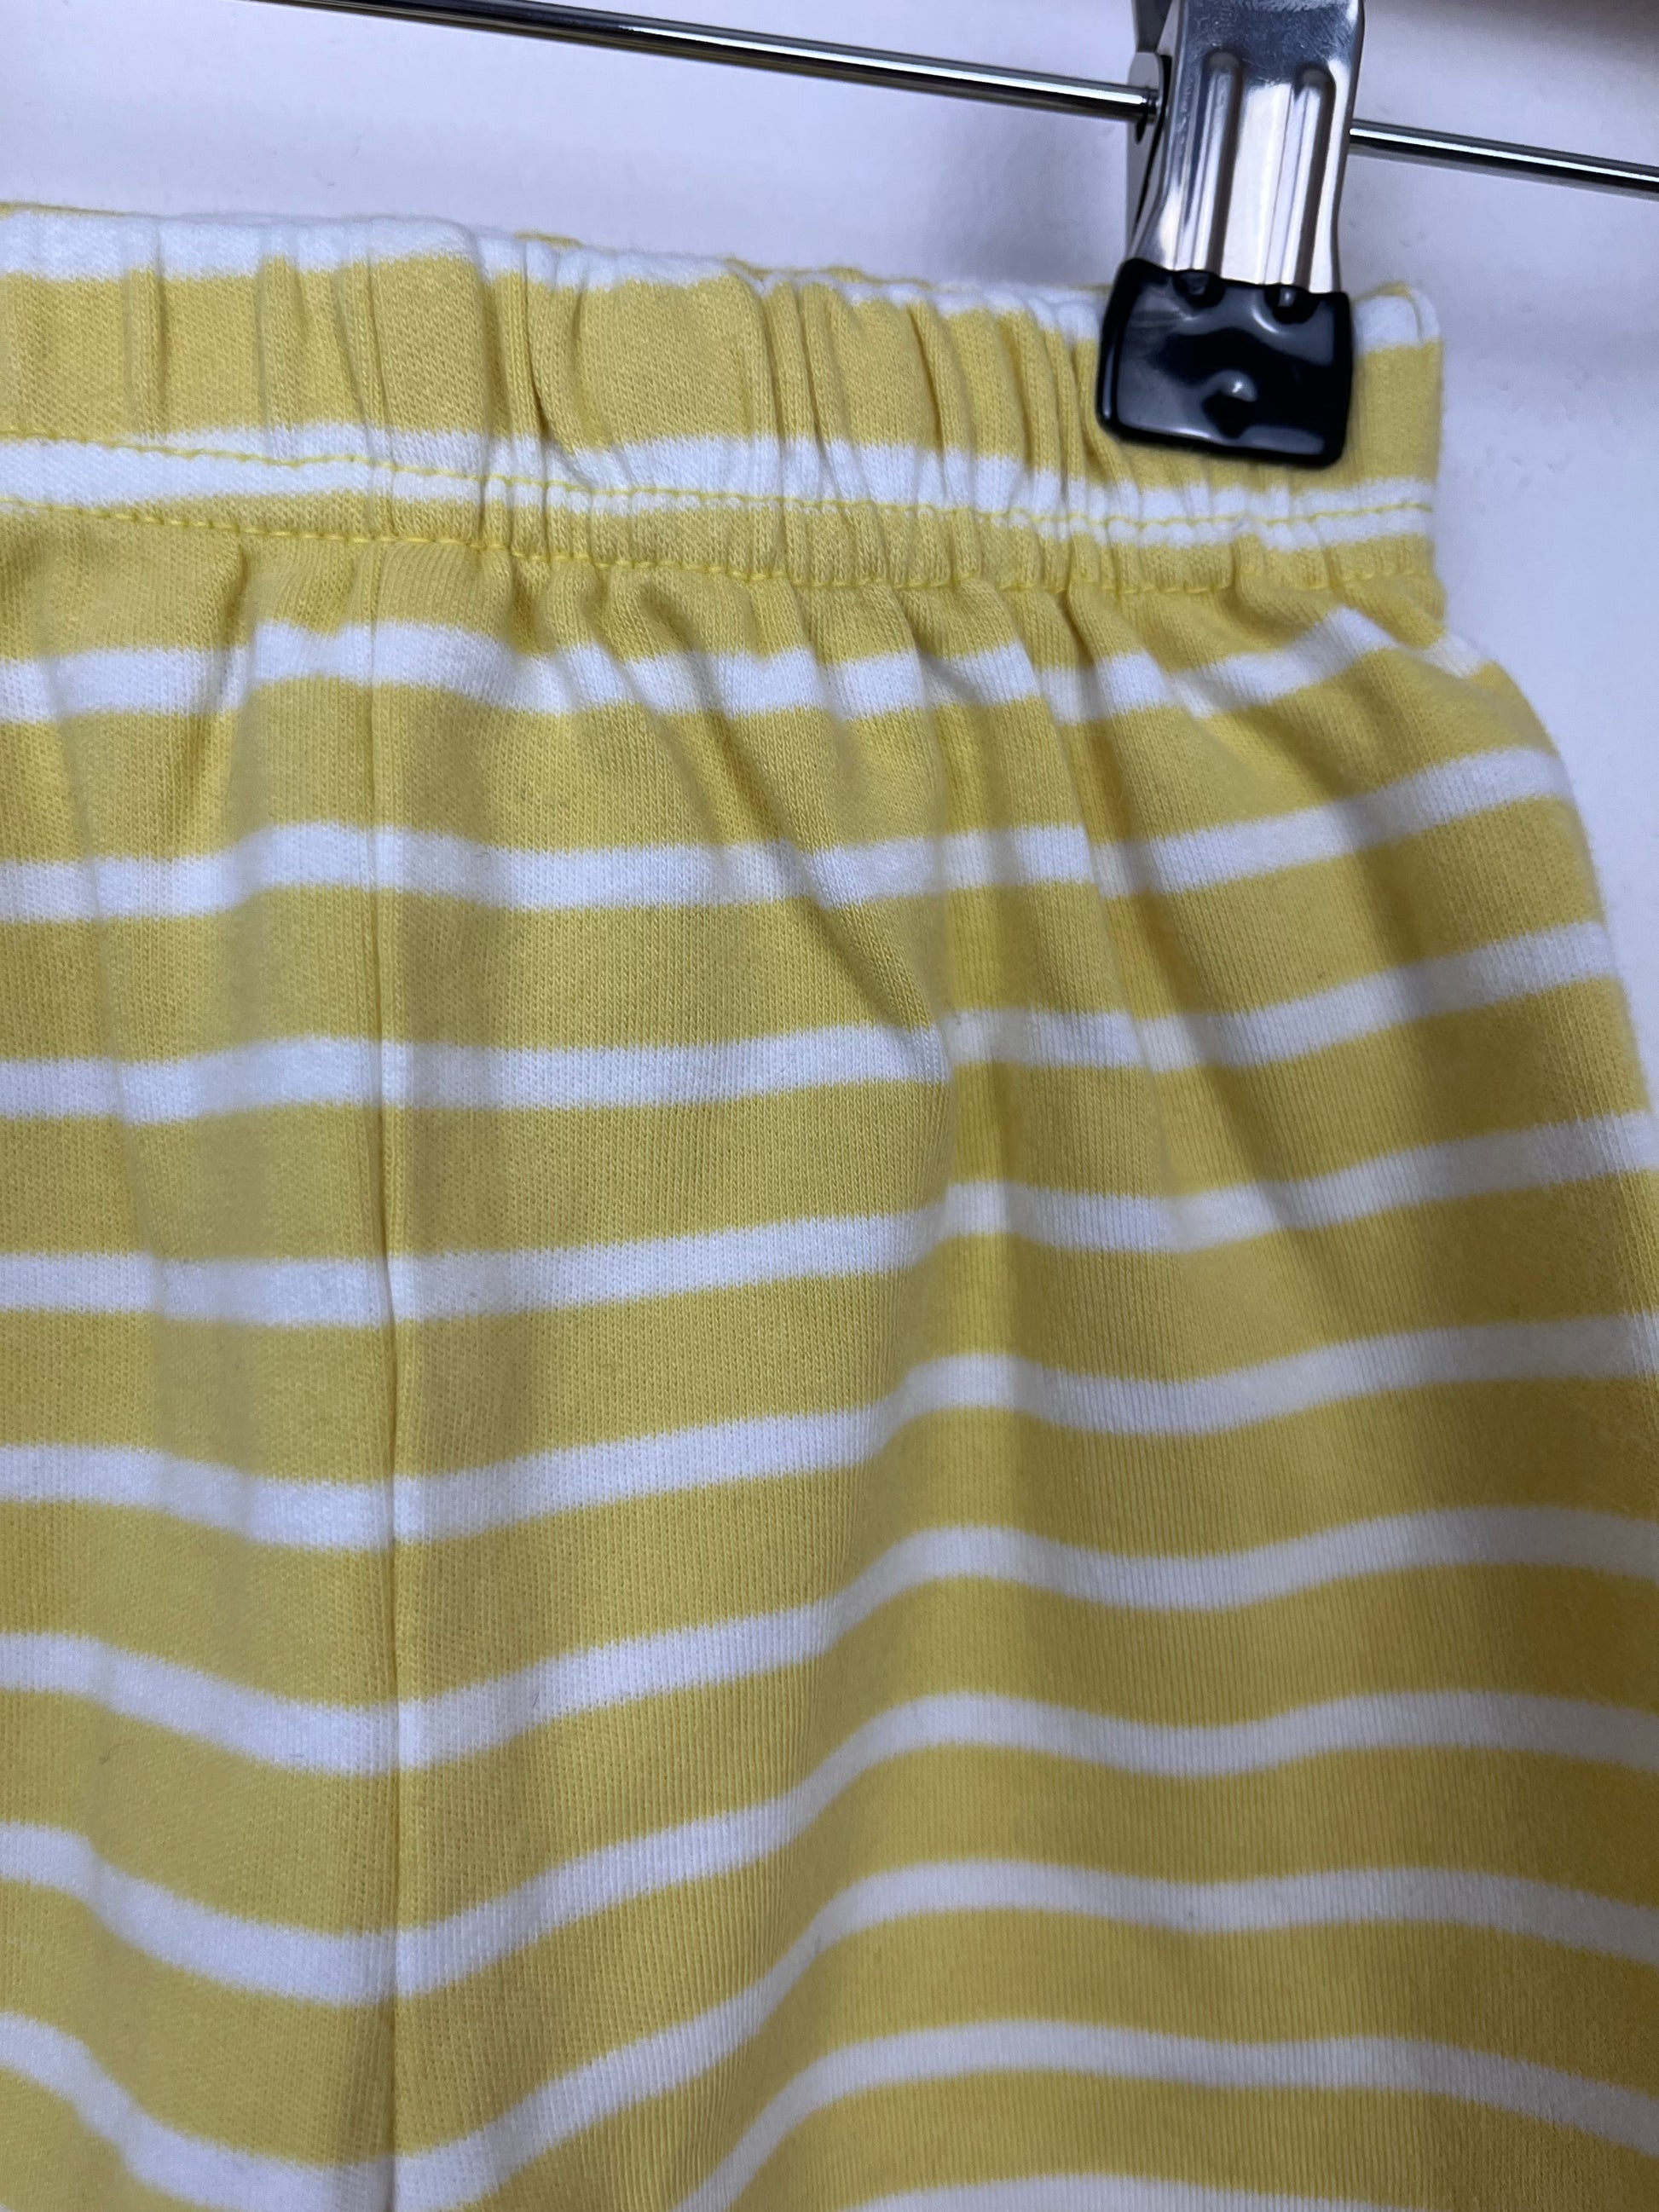 JoJo Maman Bebe 12-18 Months-Shorts-Second Snuggle Preloved